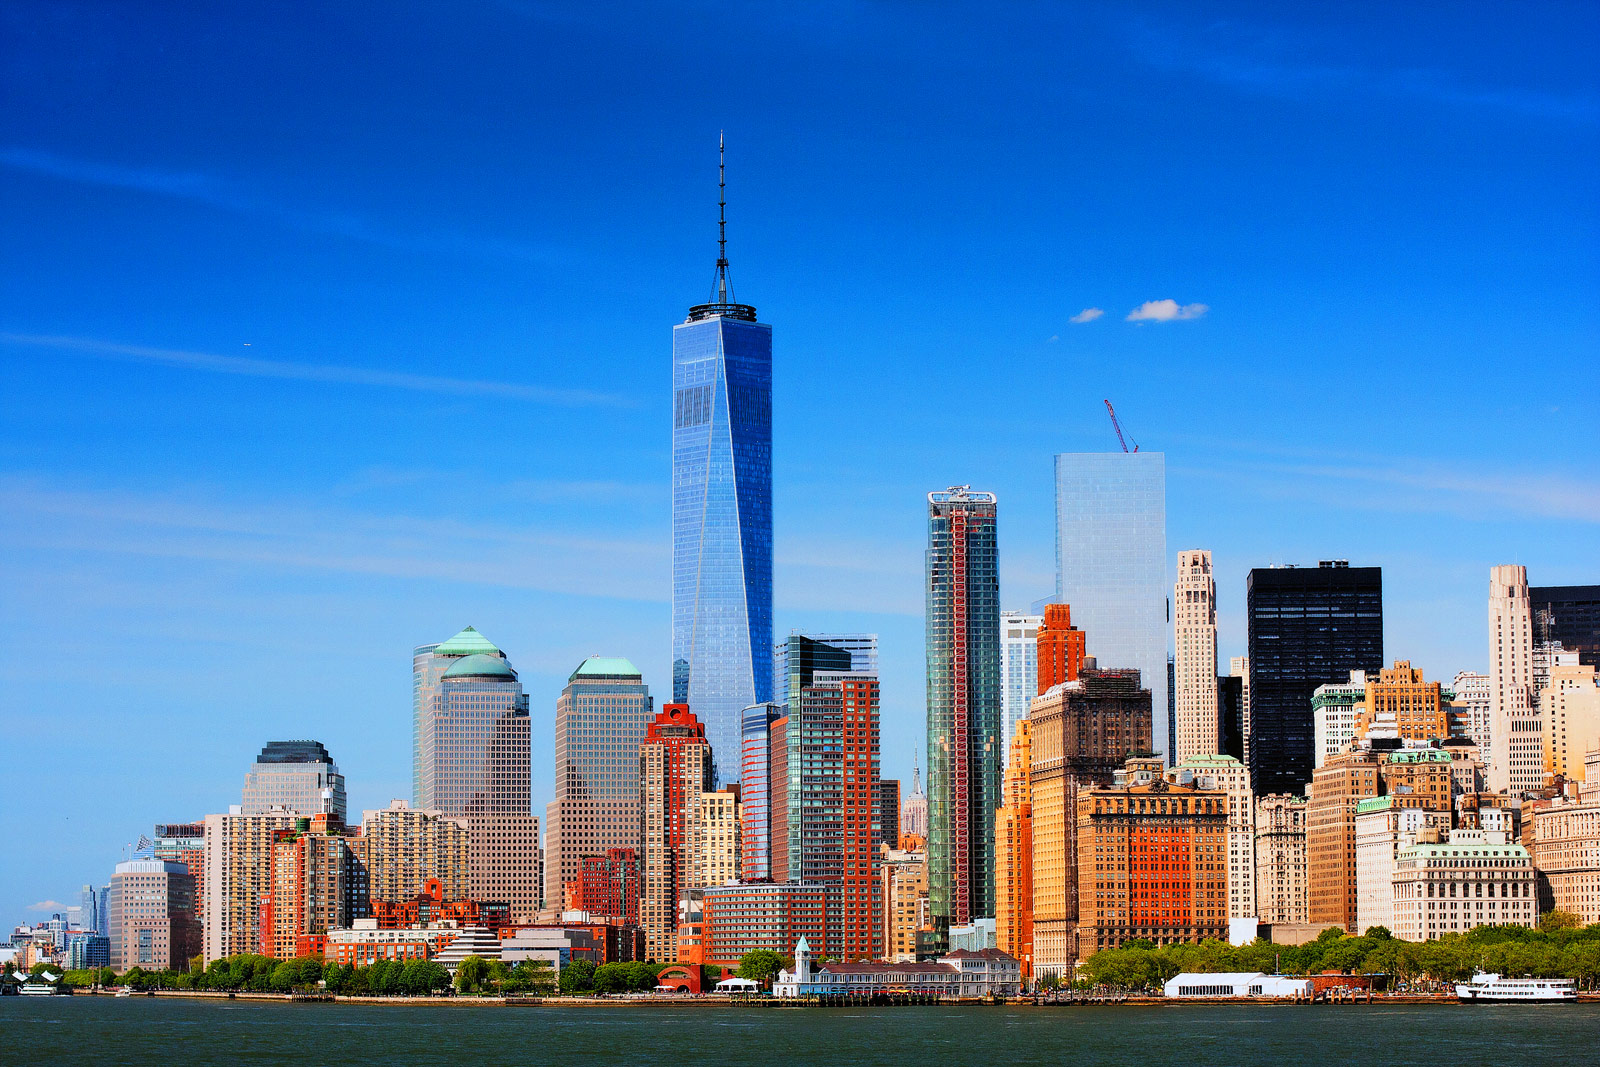 New York City Skyline from Staten Island Ferry, NY, NY - Landscape Photography By Sean Rose